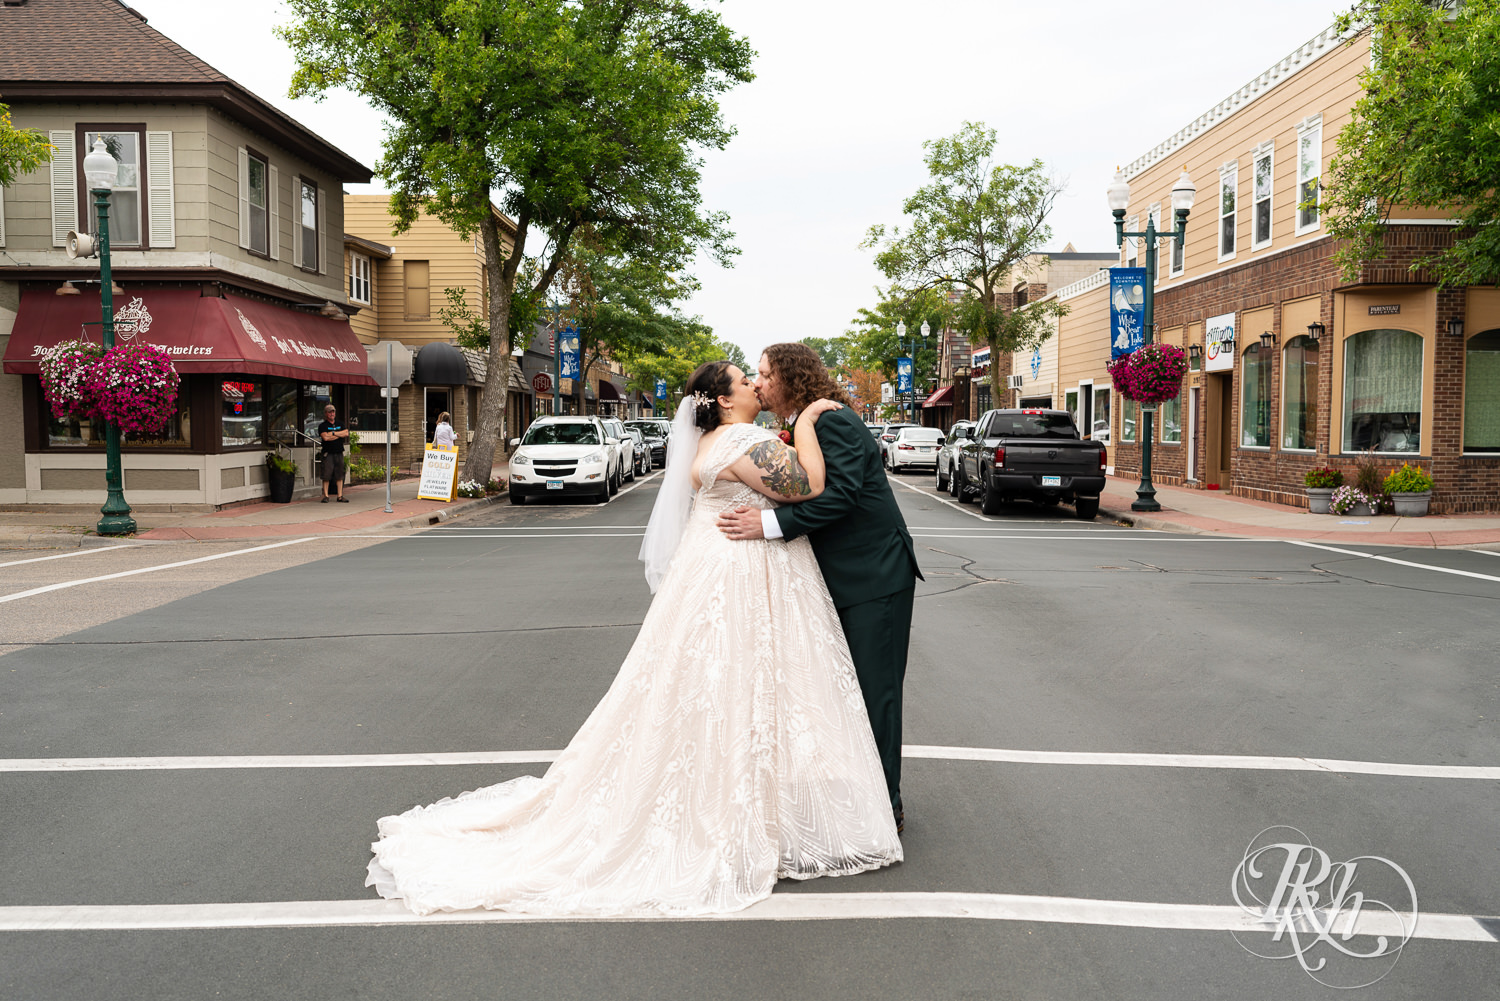 Bride and groom kiss in the street in White Bear Lake, Minnesota.